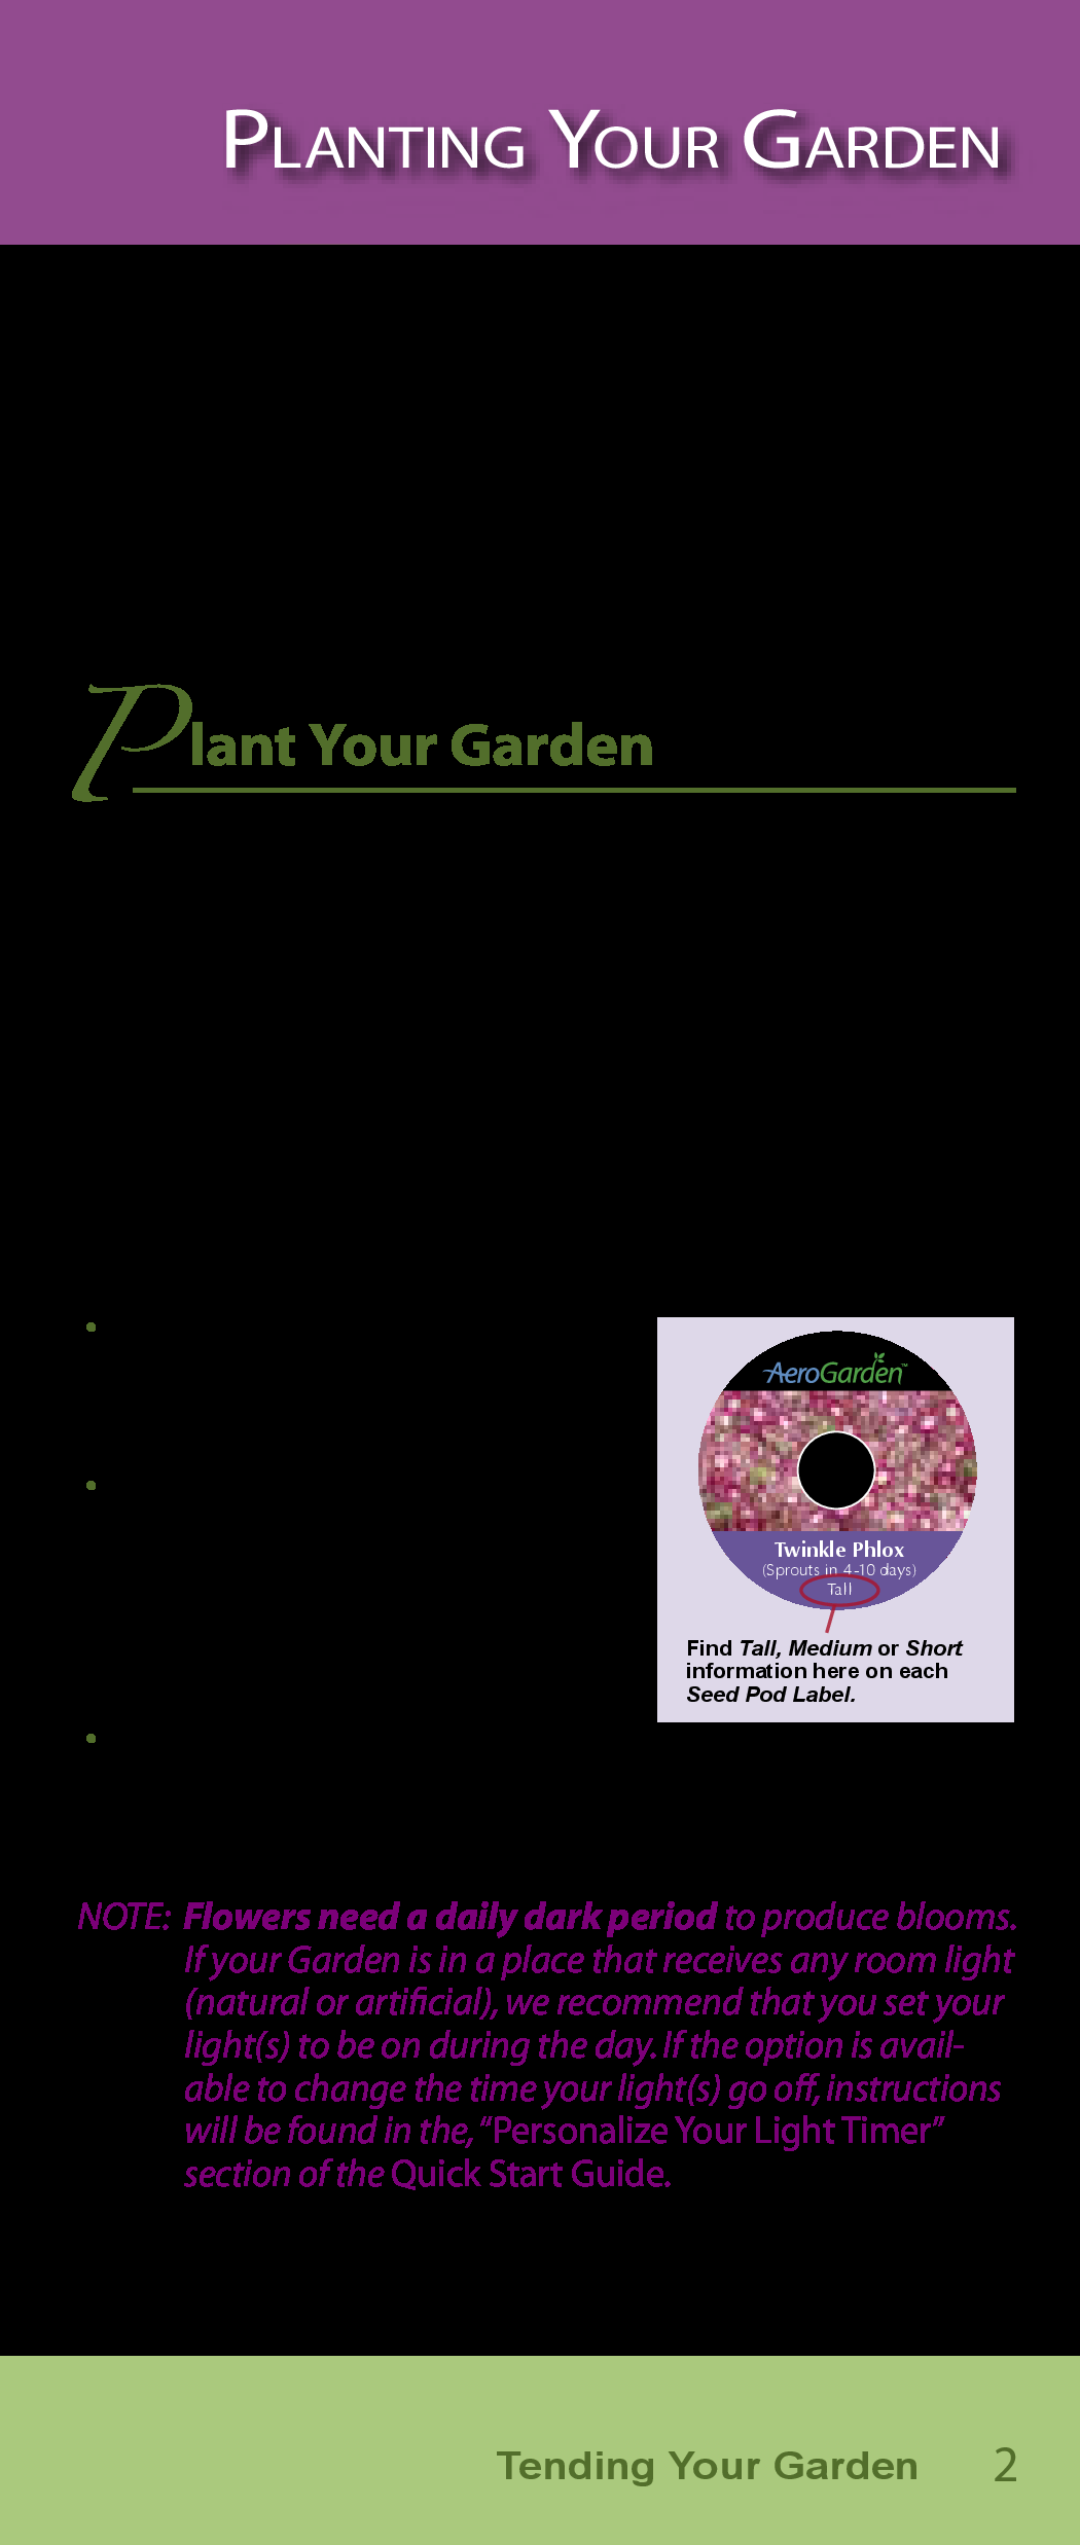 AeroGarden Flower Series manual Planting Your Garden, Tending Your Garden 